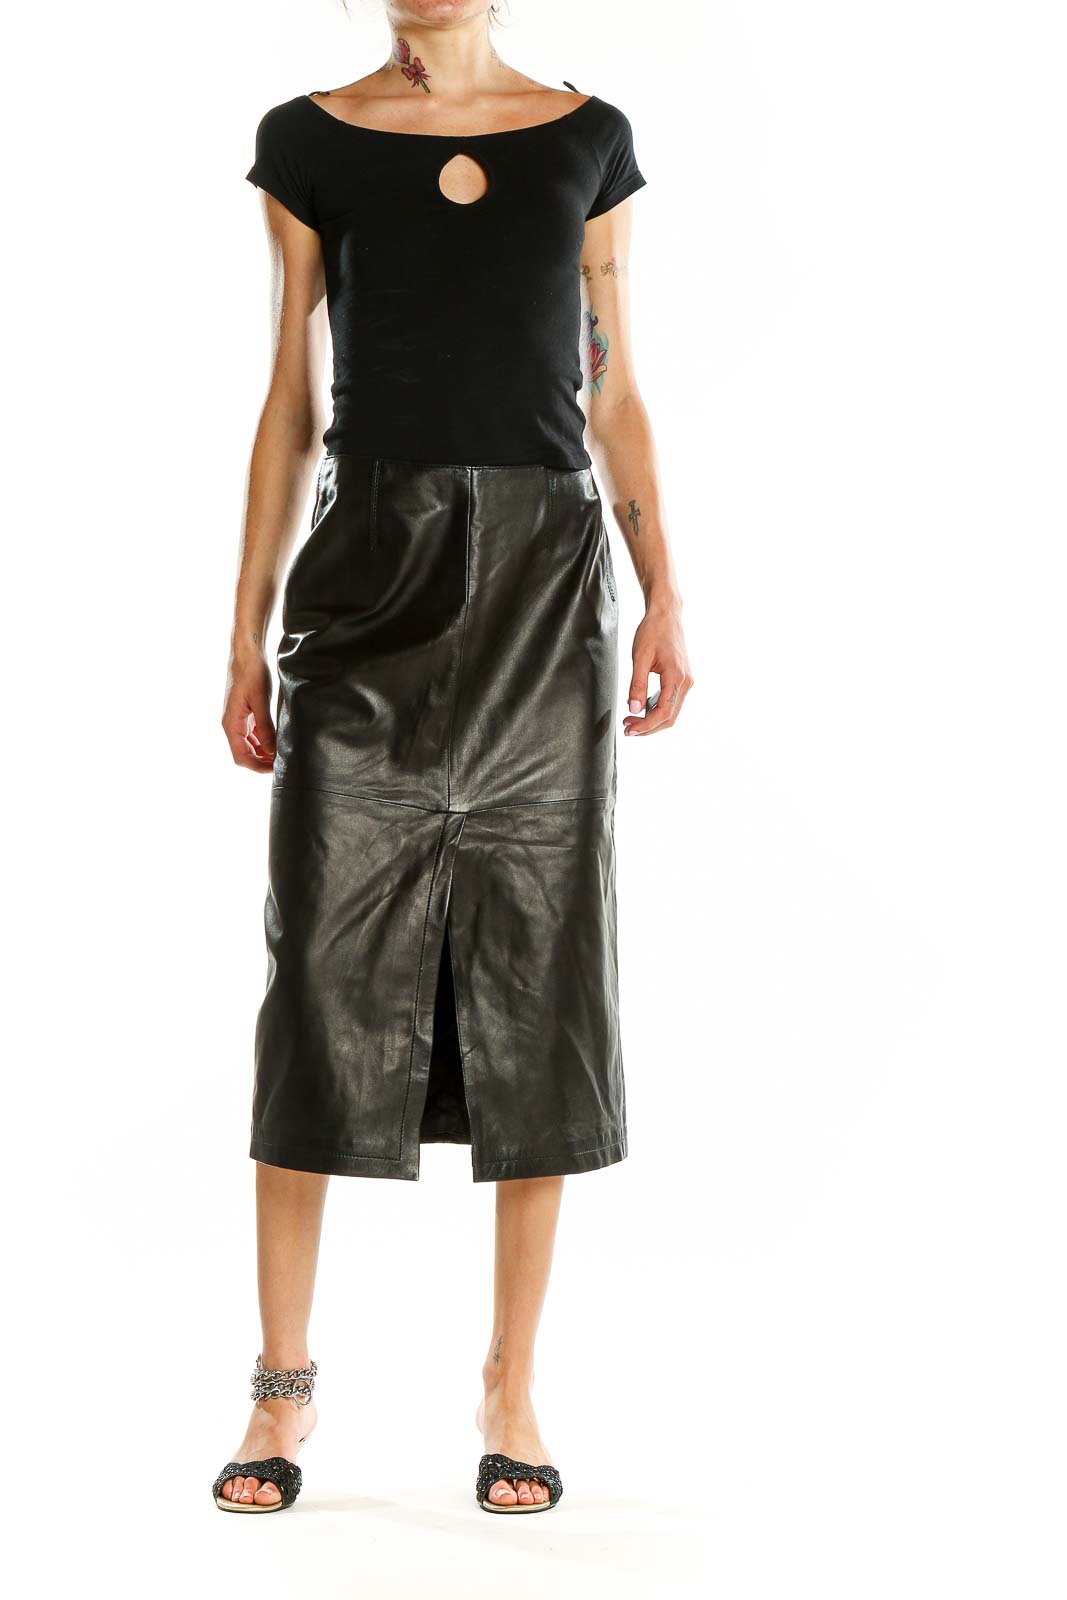 Armani Collezioni - Black Leather Skirt Rayon Acetate